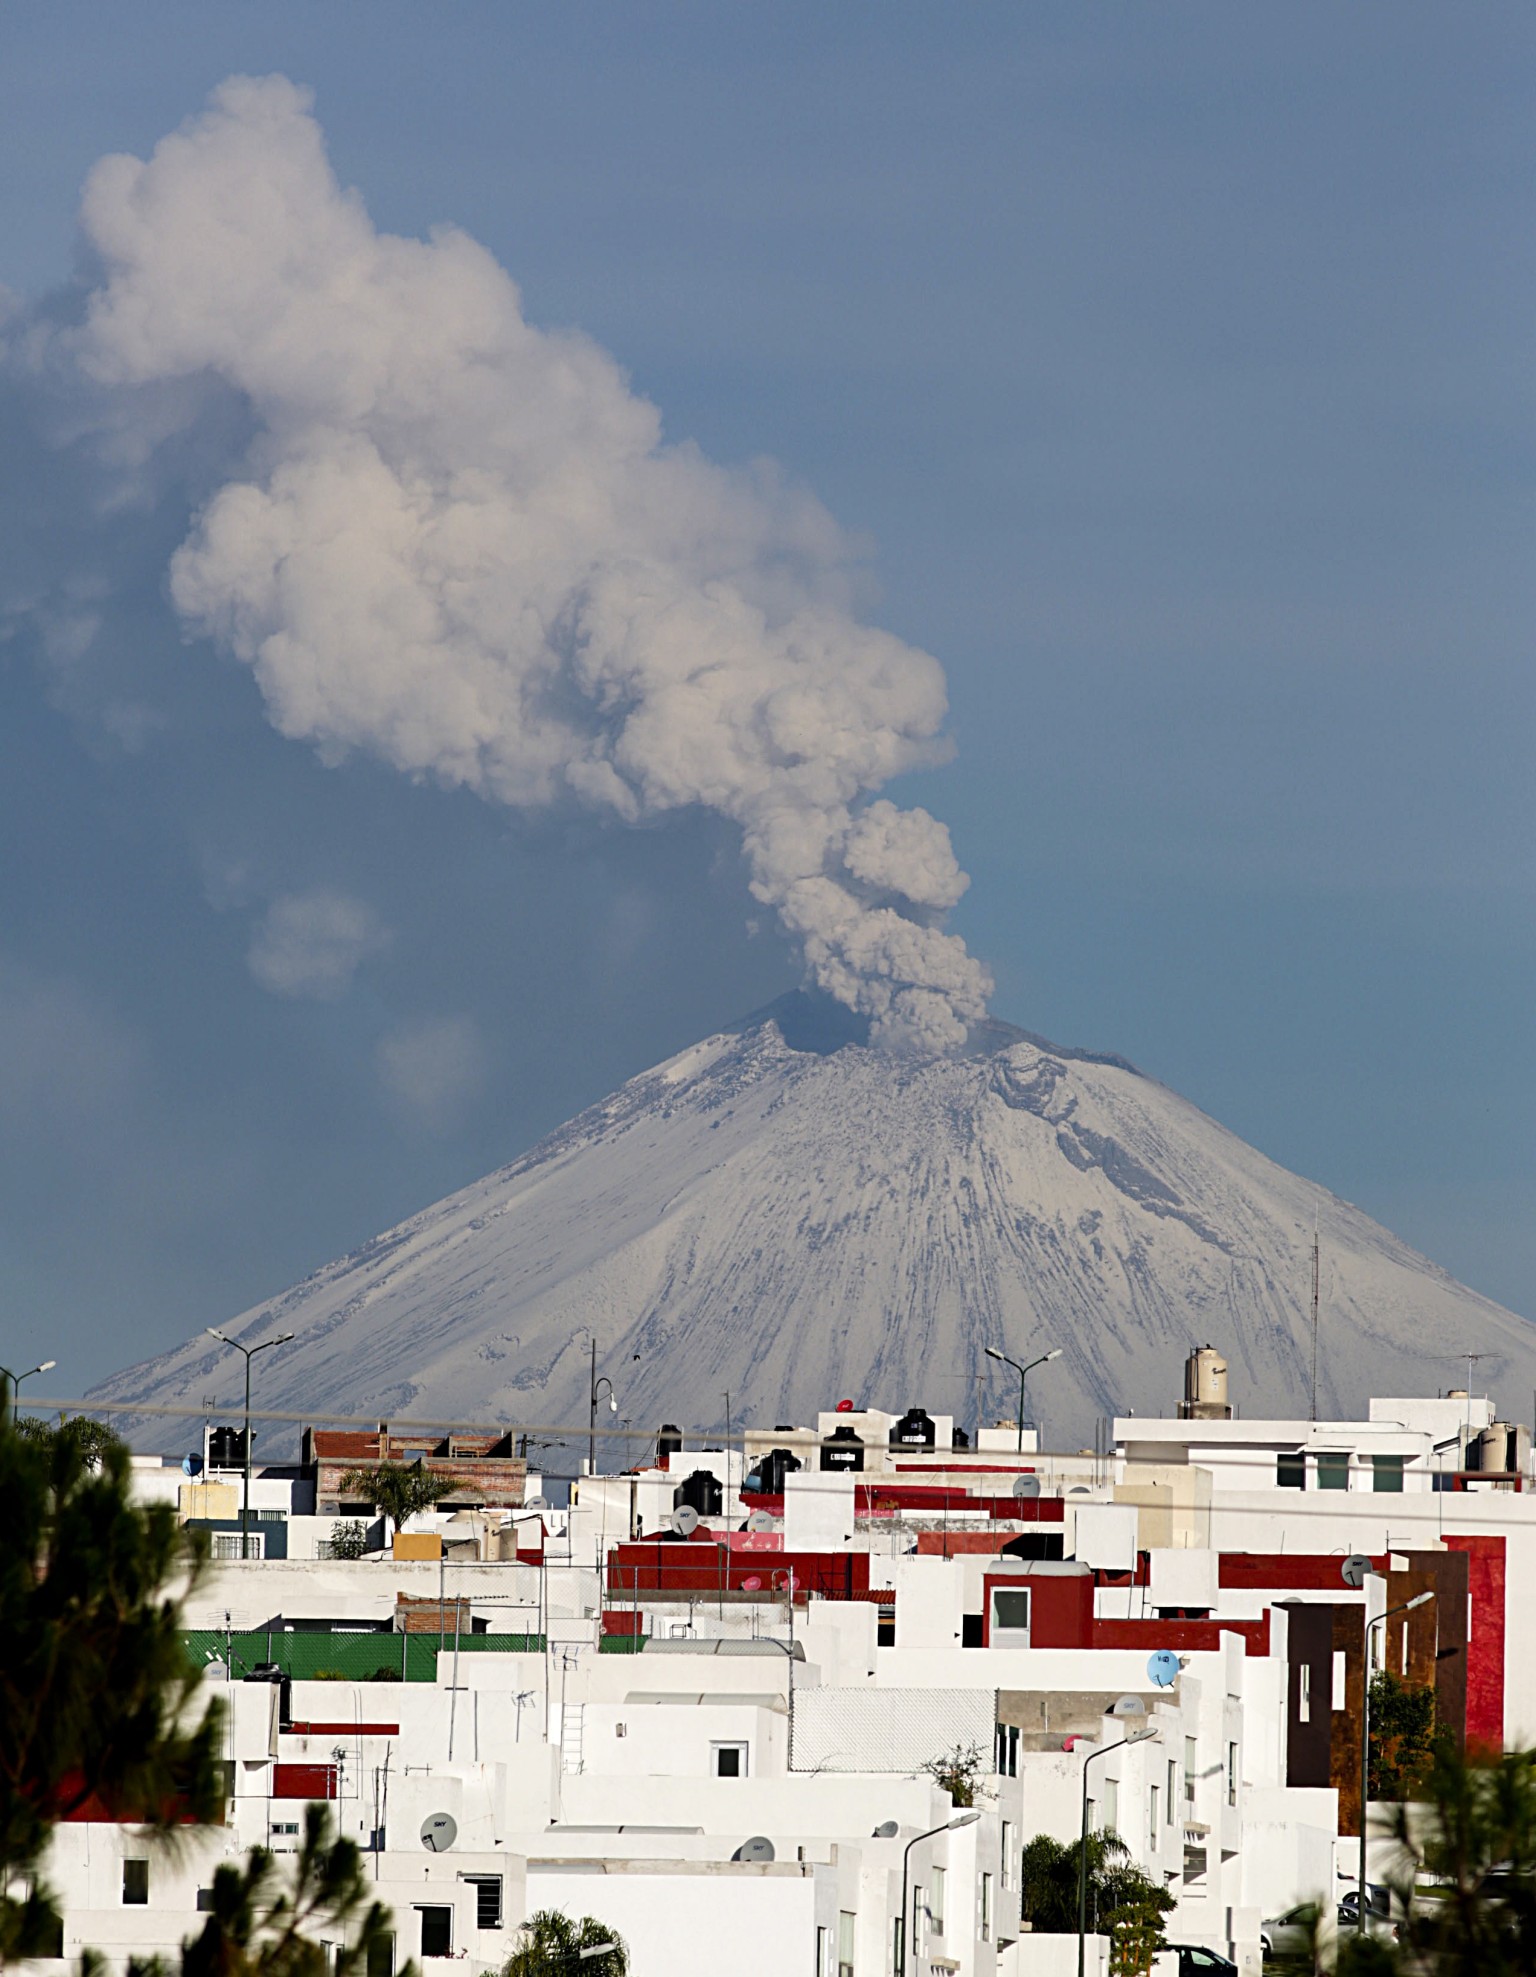 Popocatepetl Volcano Eruption In Mexico Captured In Footage Filmed From